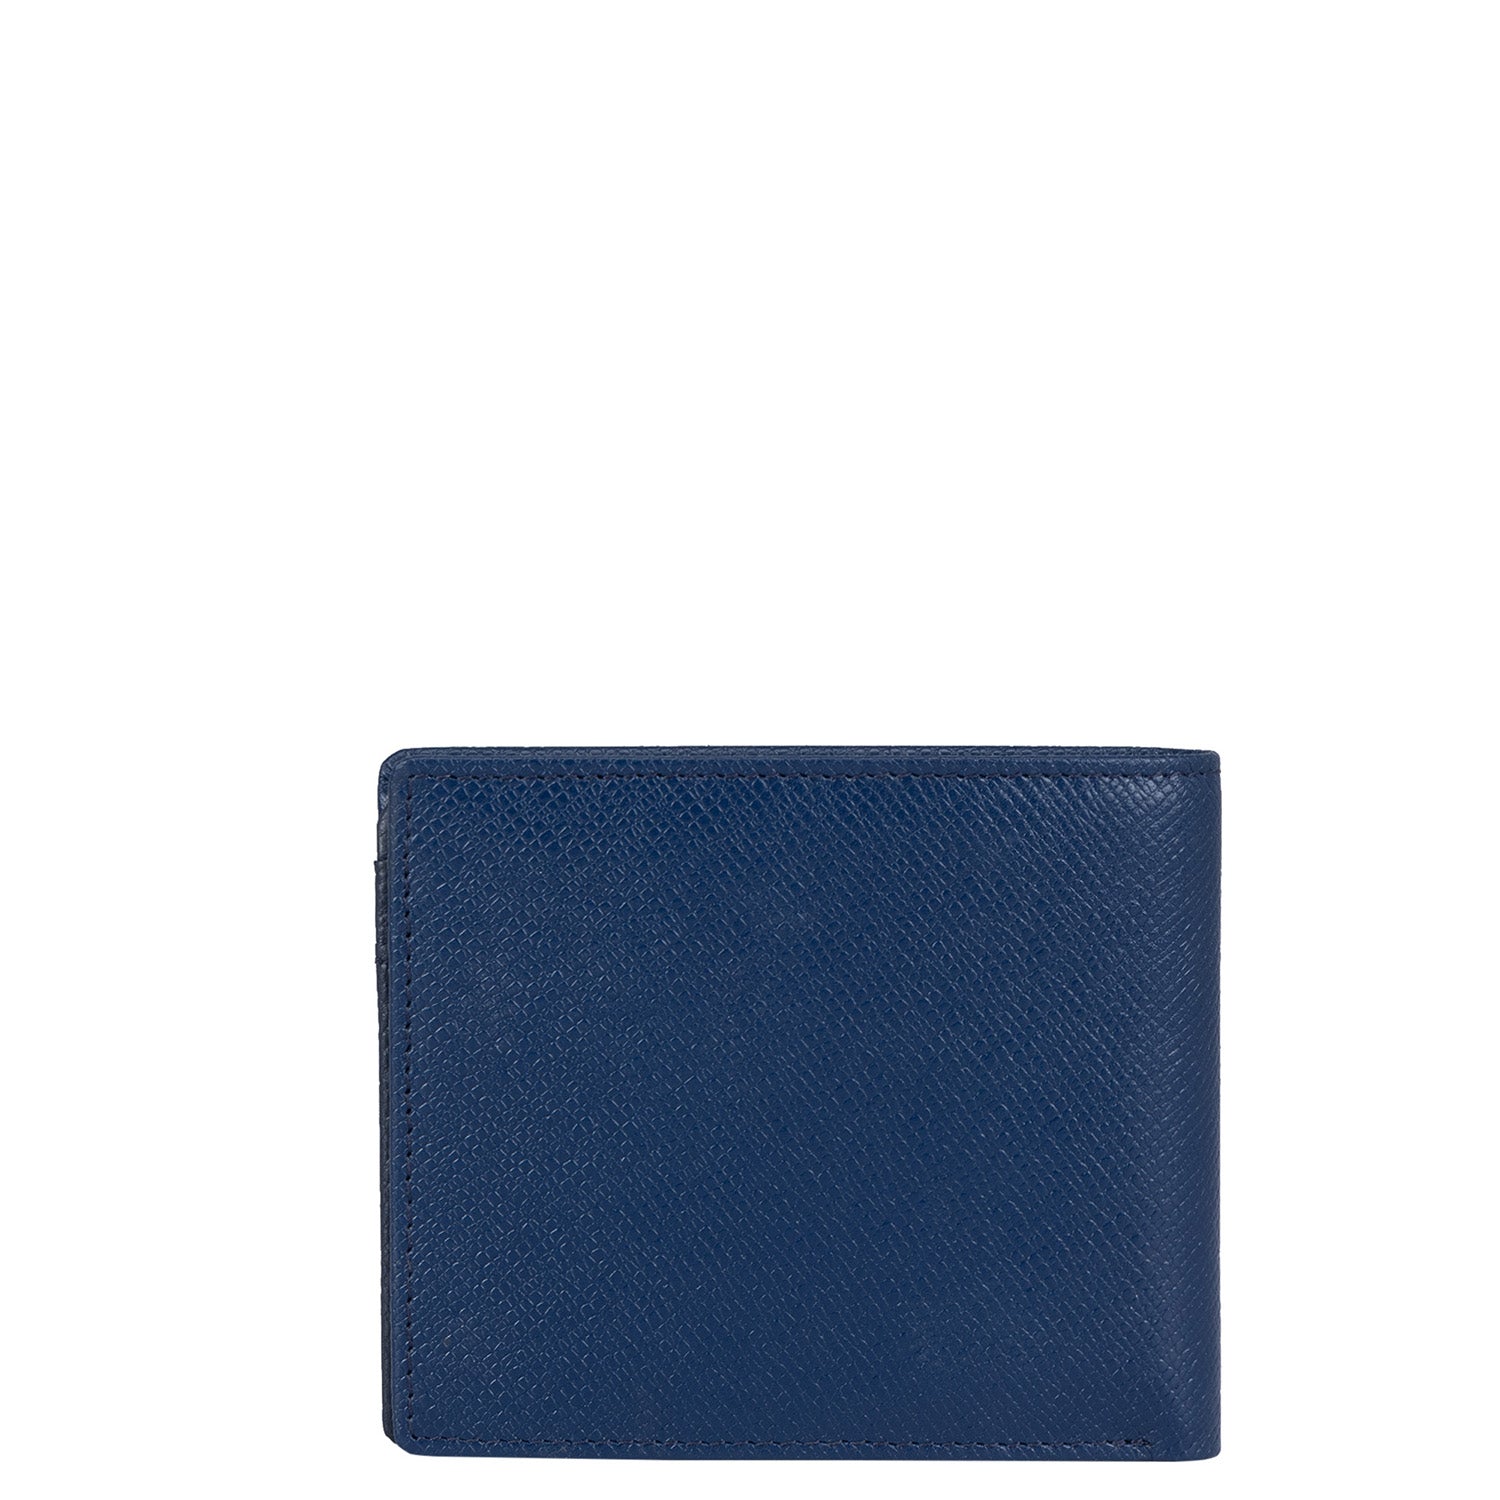 Da Milano Franzy Leather Mens Wallet - Patriot Blue